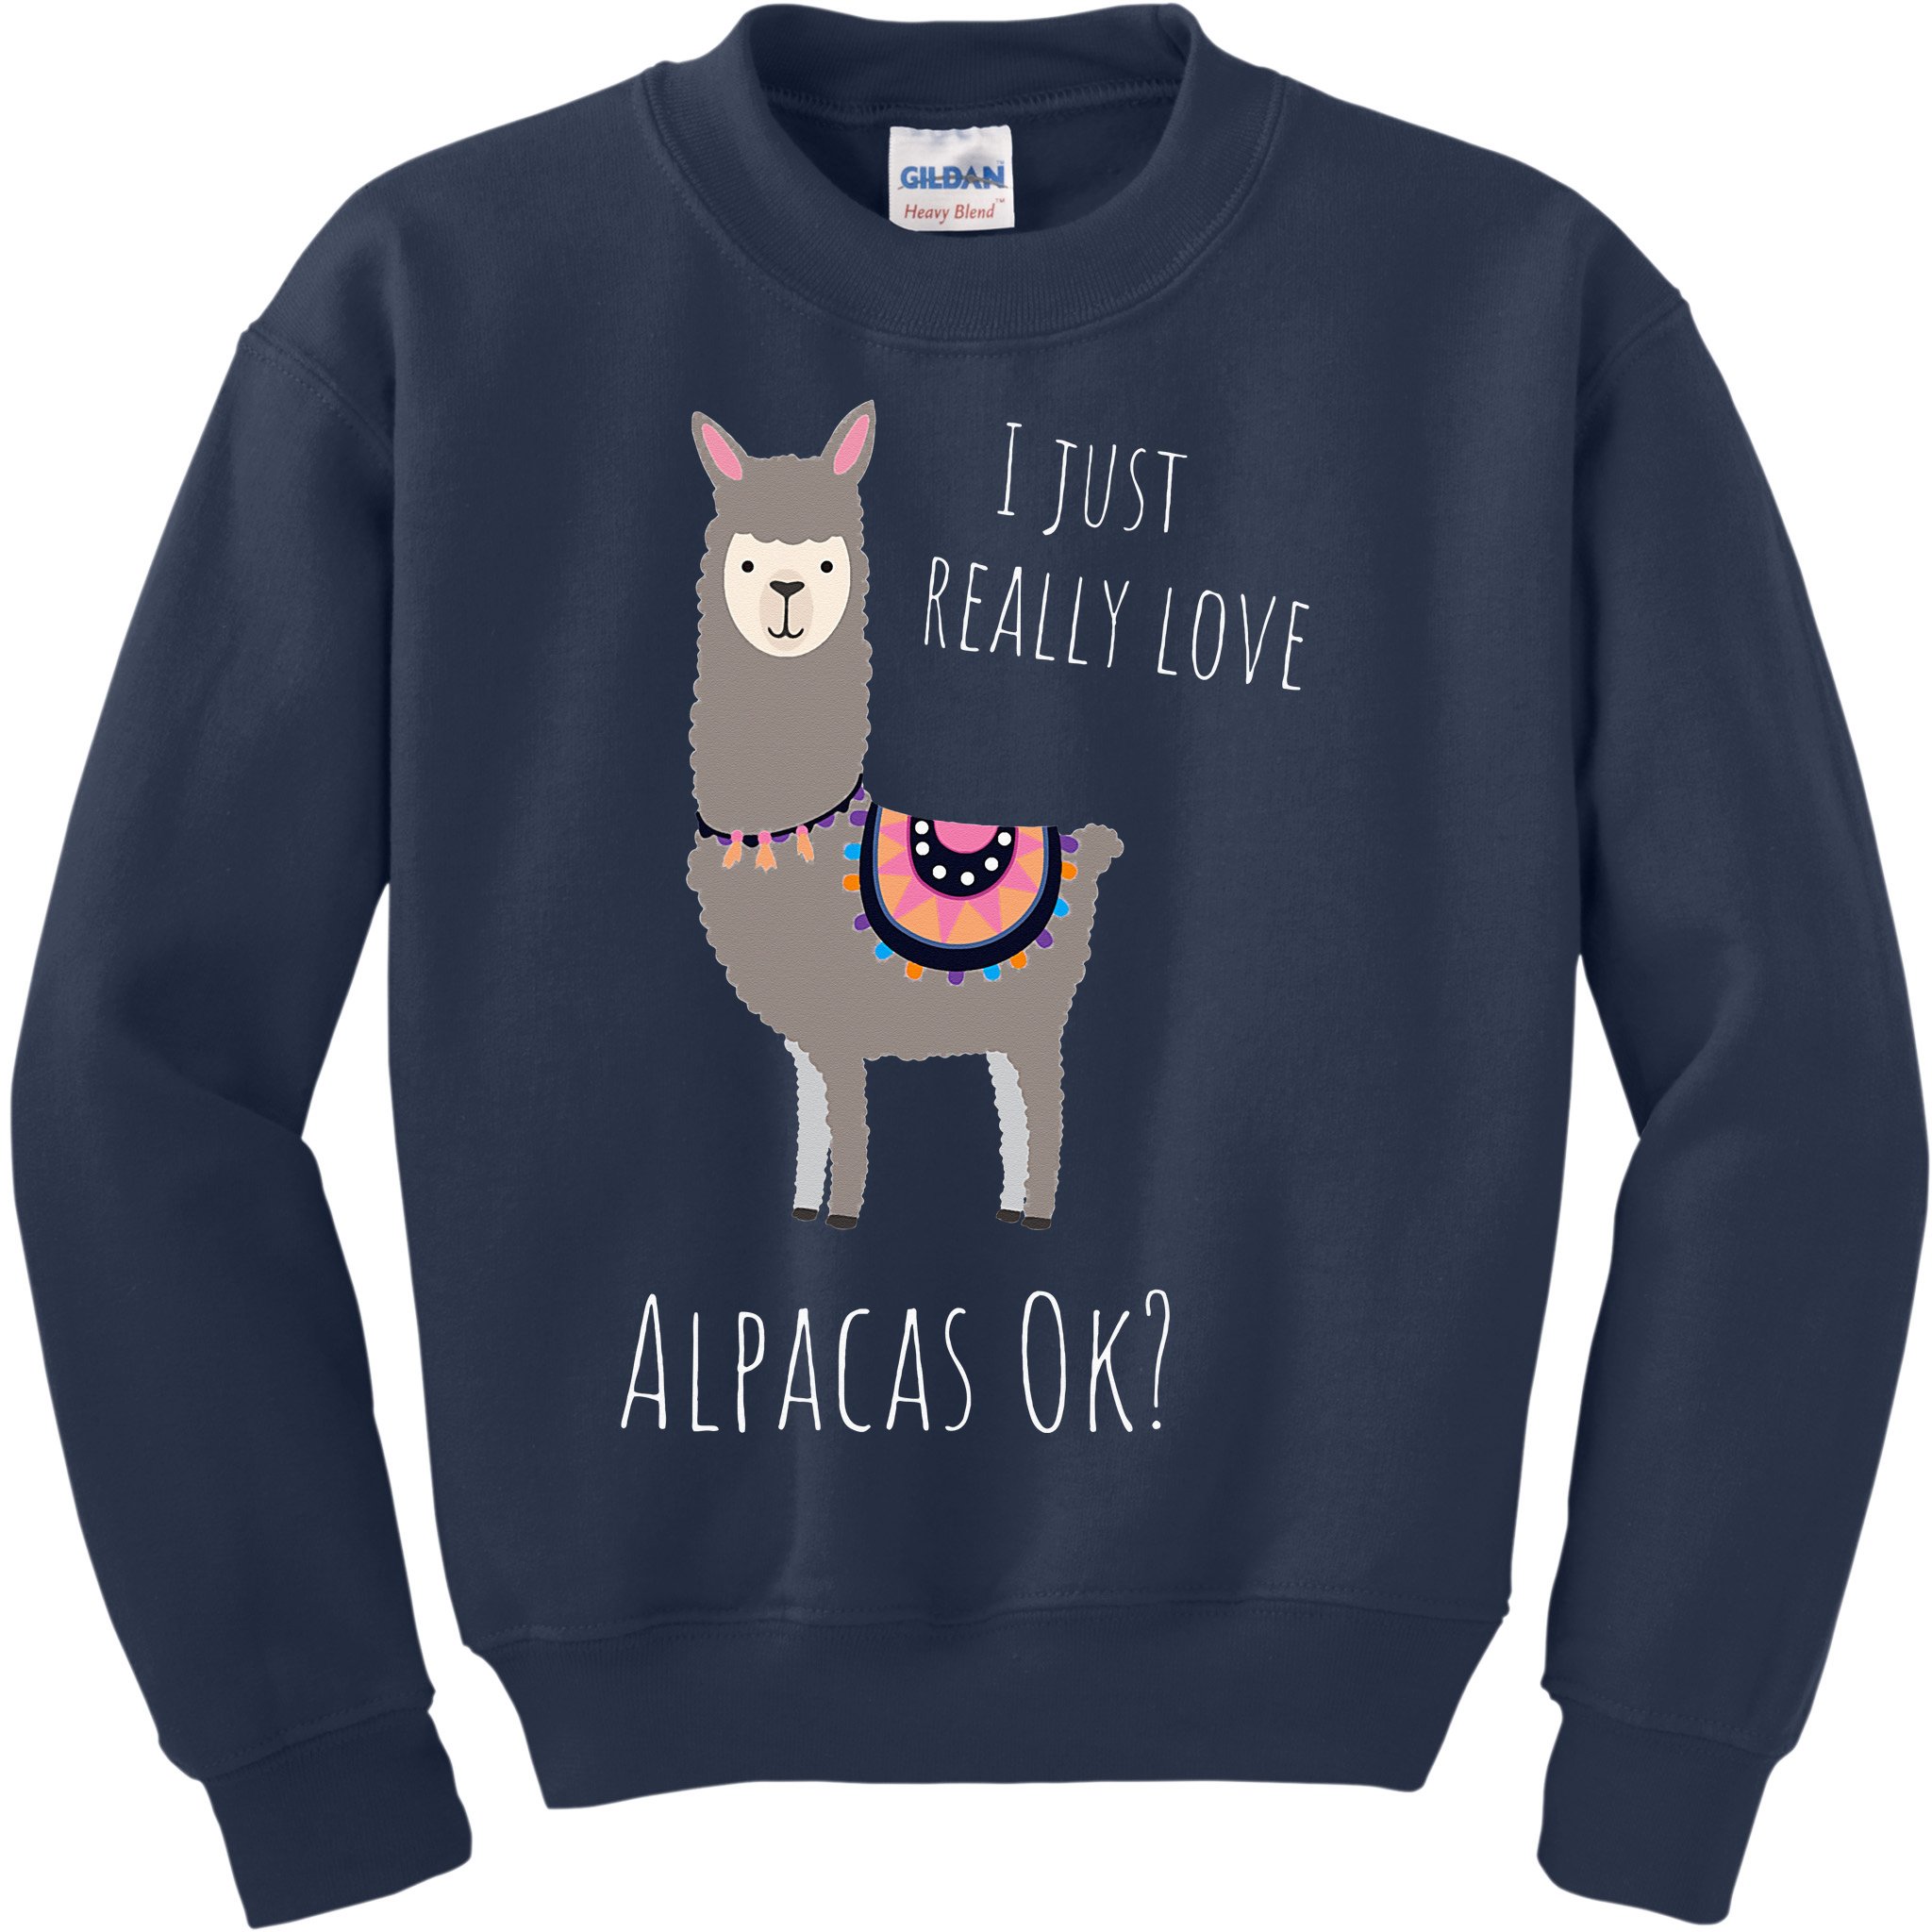 Alpaca Design - I Just Really Love Alpacas Ok Kids Sweatshirt ...